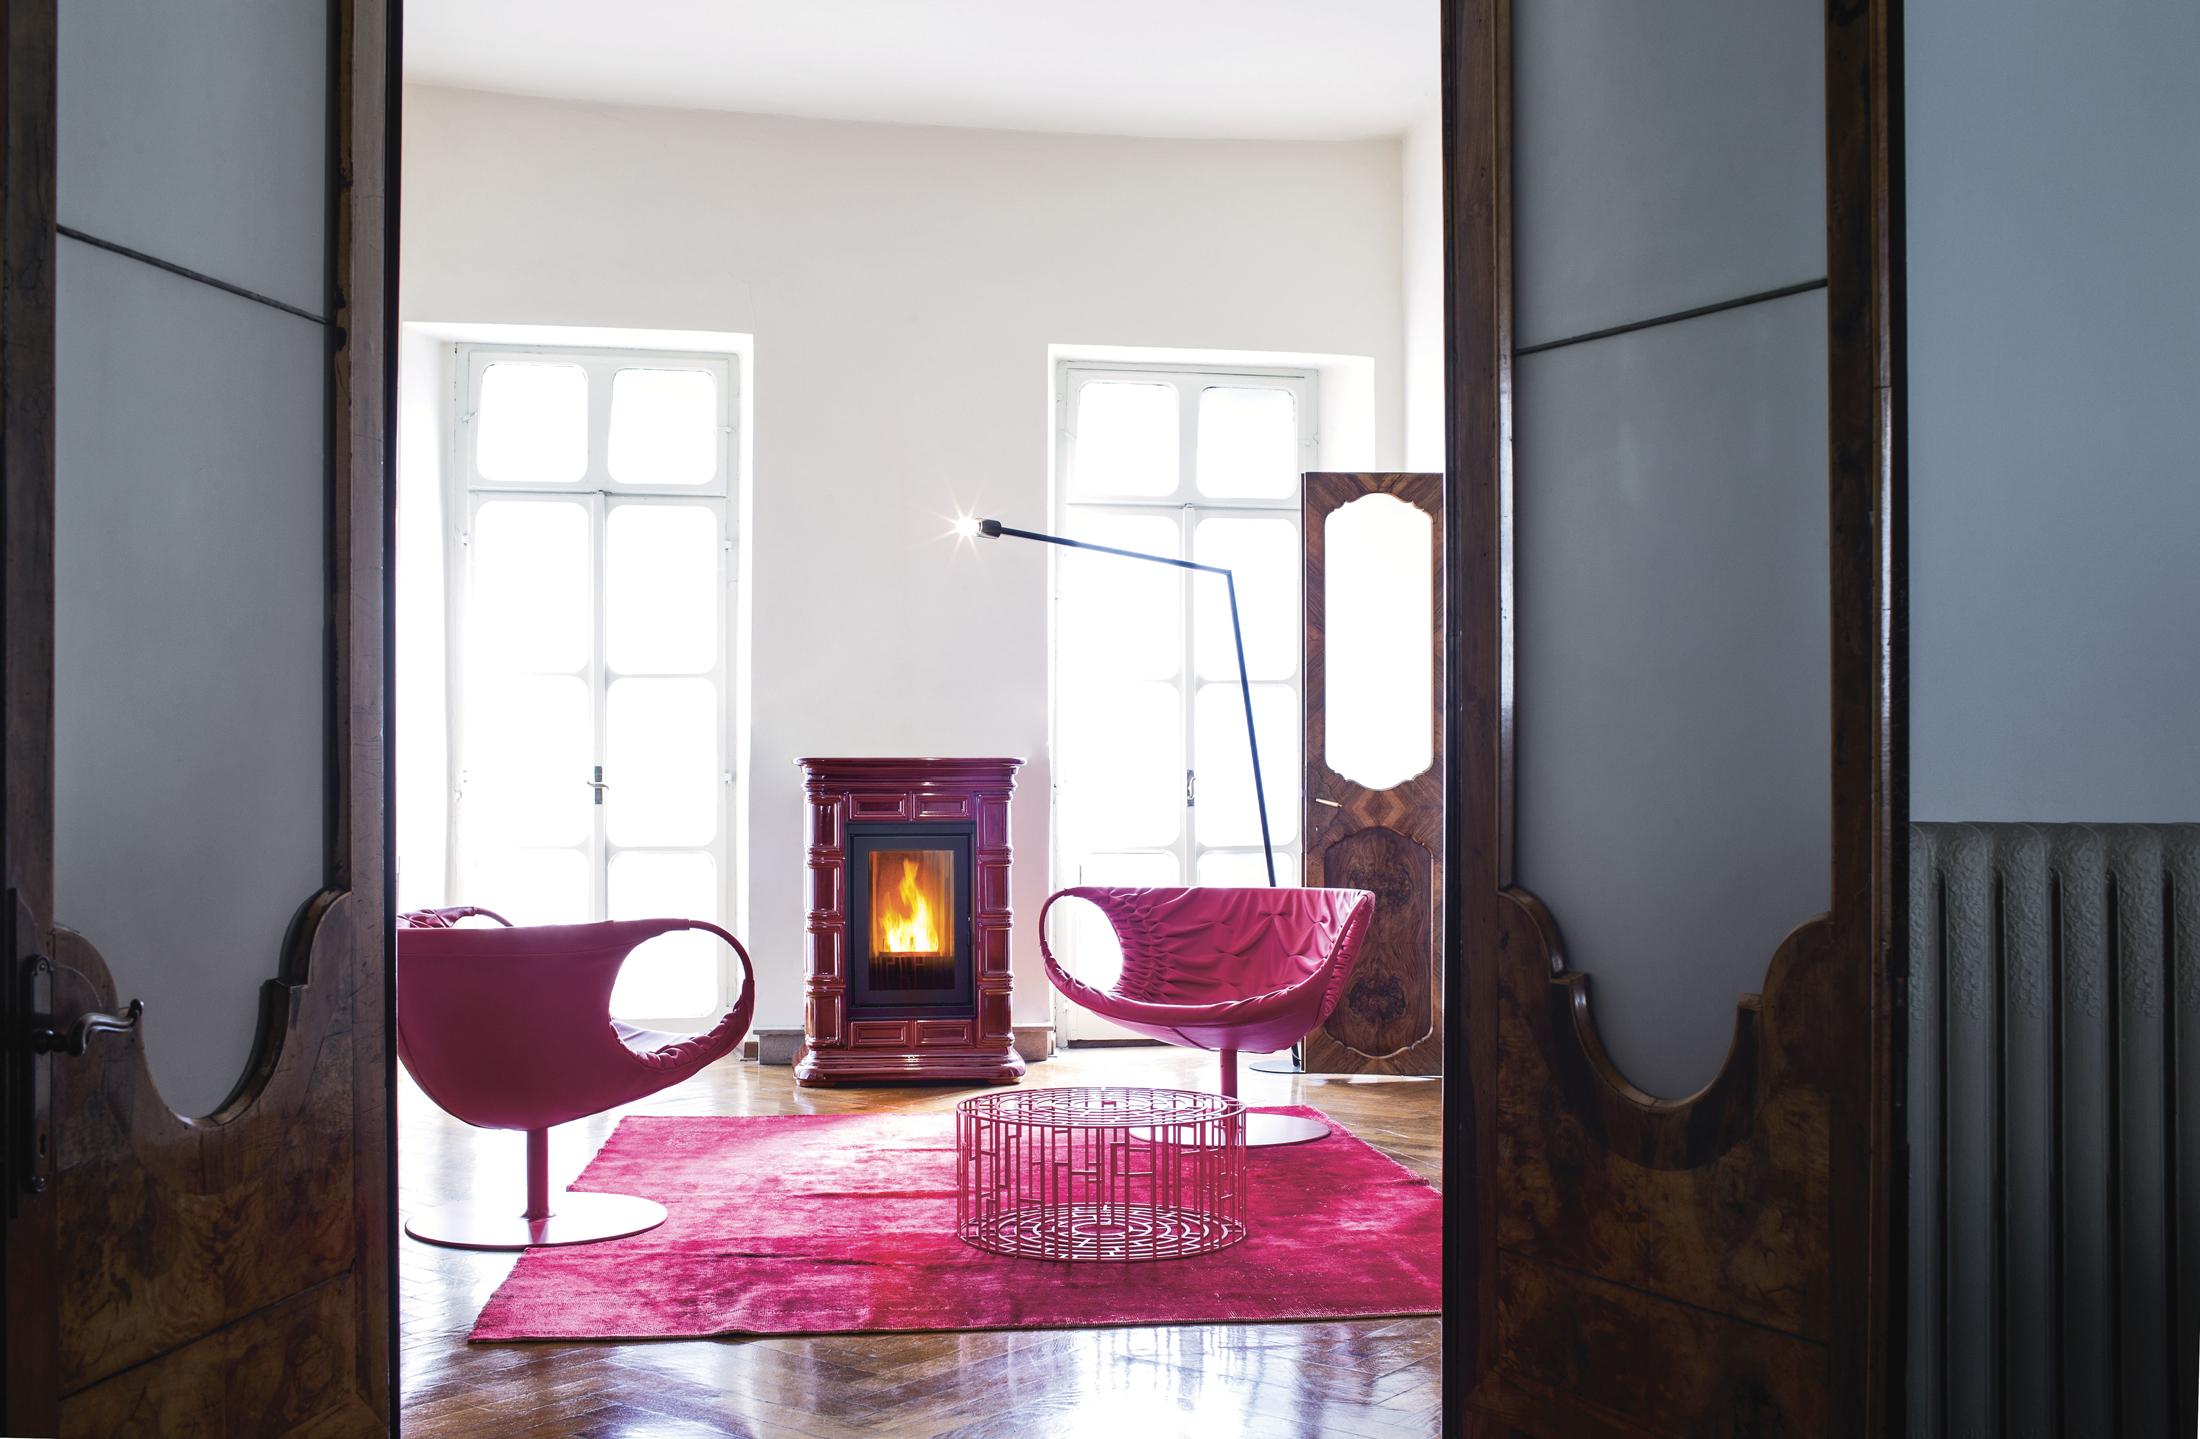 Pelletofen aus Keramik #teppich #kamin #70erjahre #sessel #pinkfarbenerteppich #pinkfarbenersessel ©Sergio Leoni